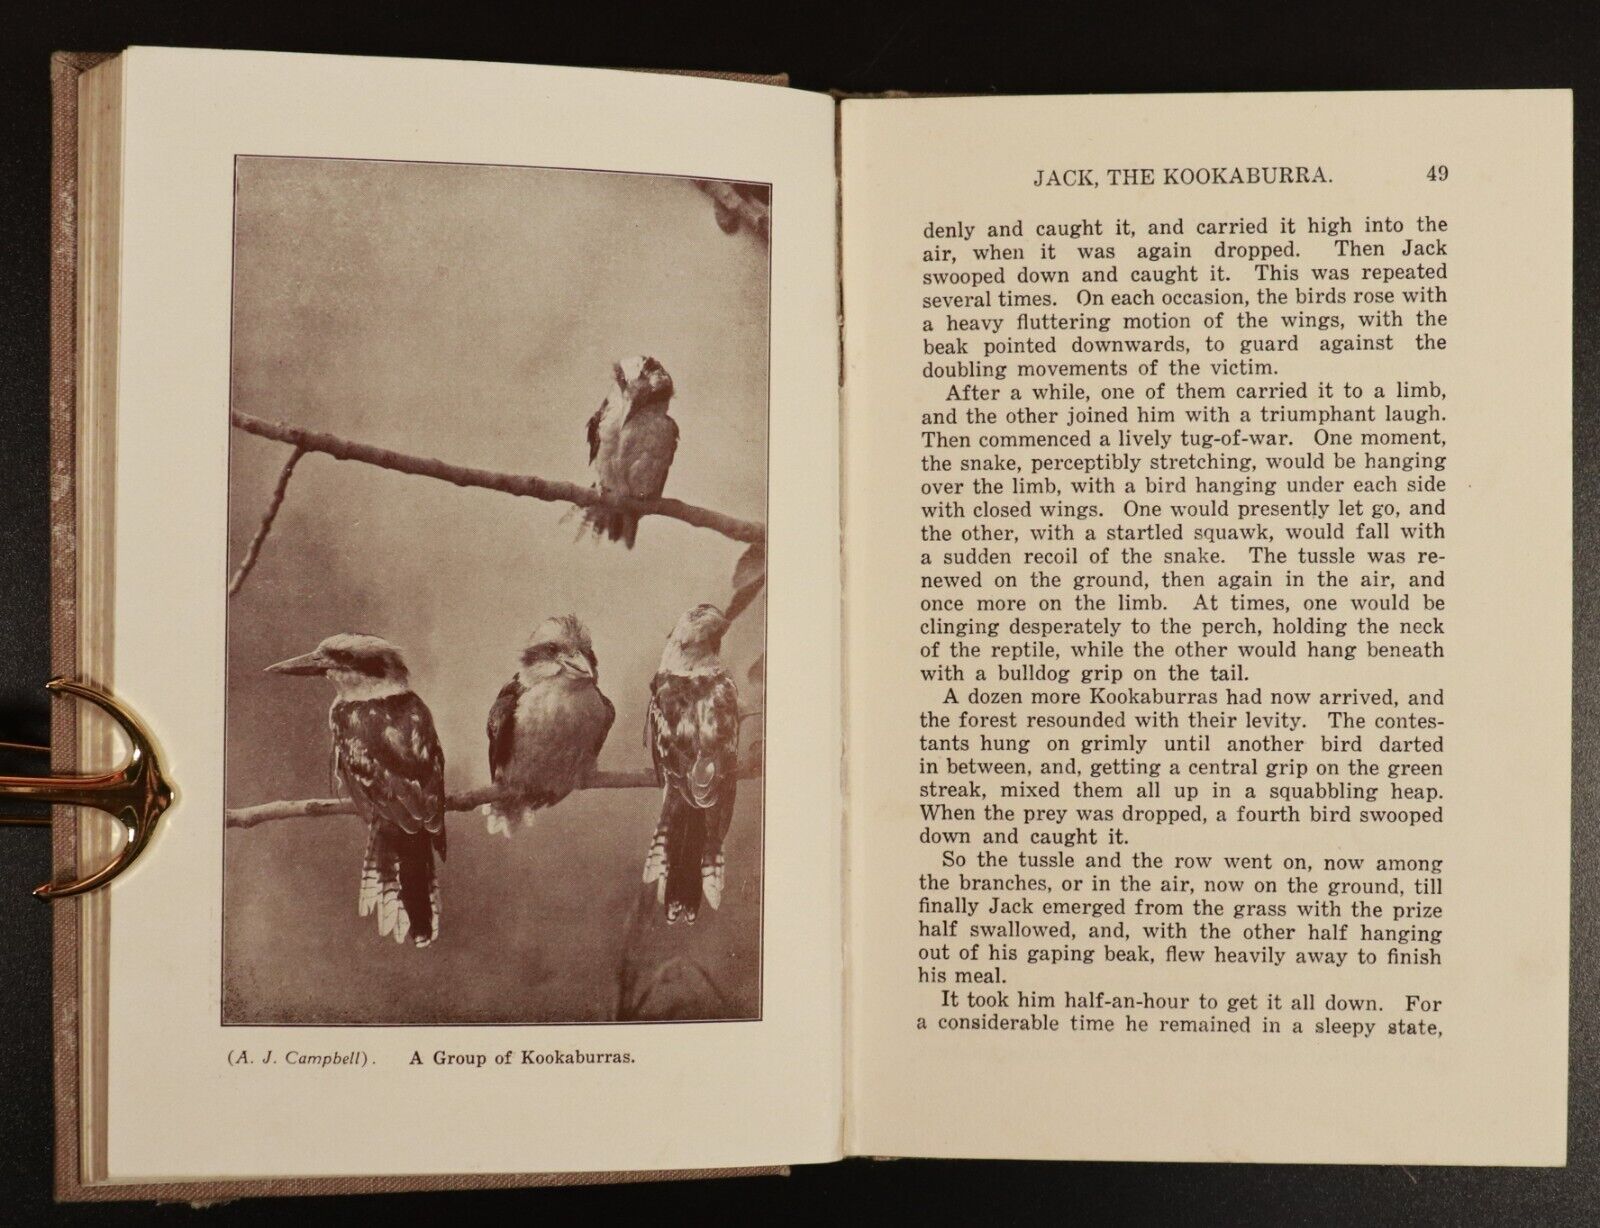 c1921 Spotty The Bower-Bird by E.S. Sorenson Antique Australian Childrens Book